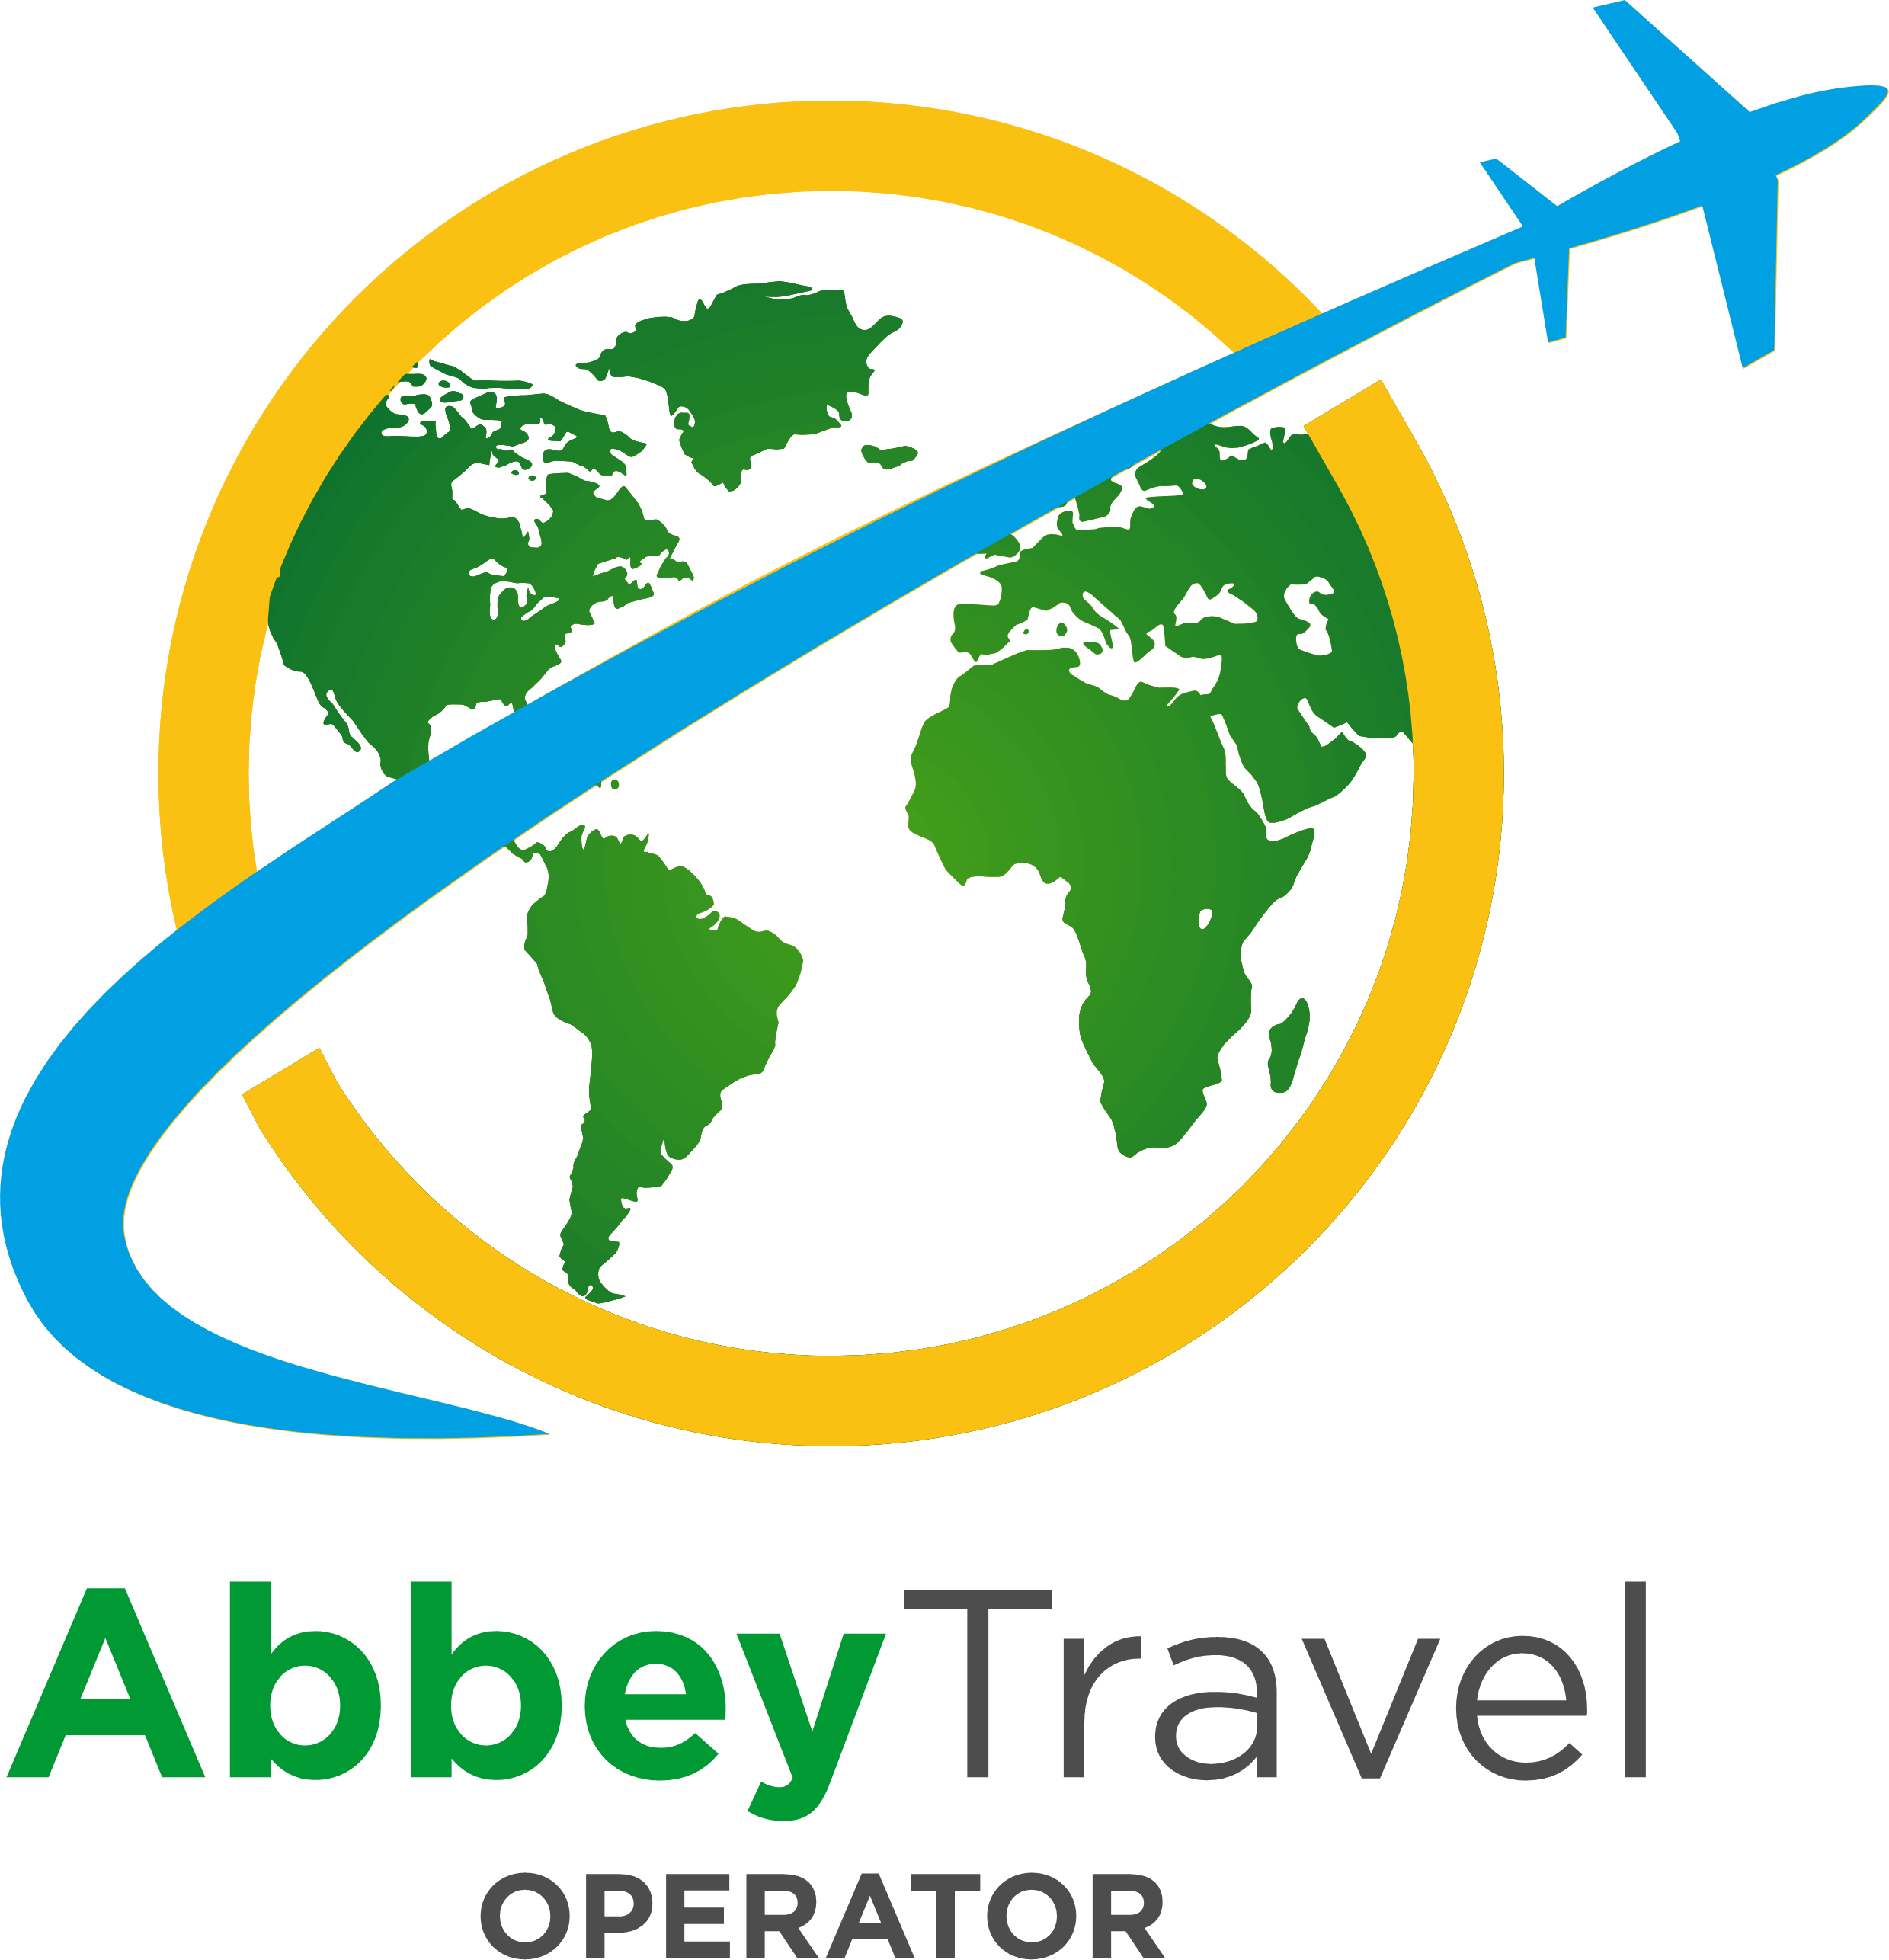 Abbey Travel operator (1)